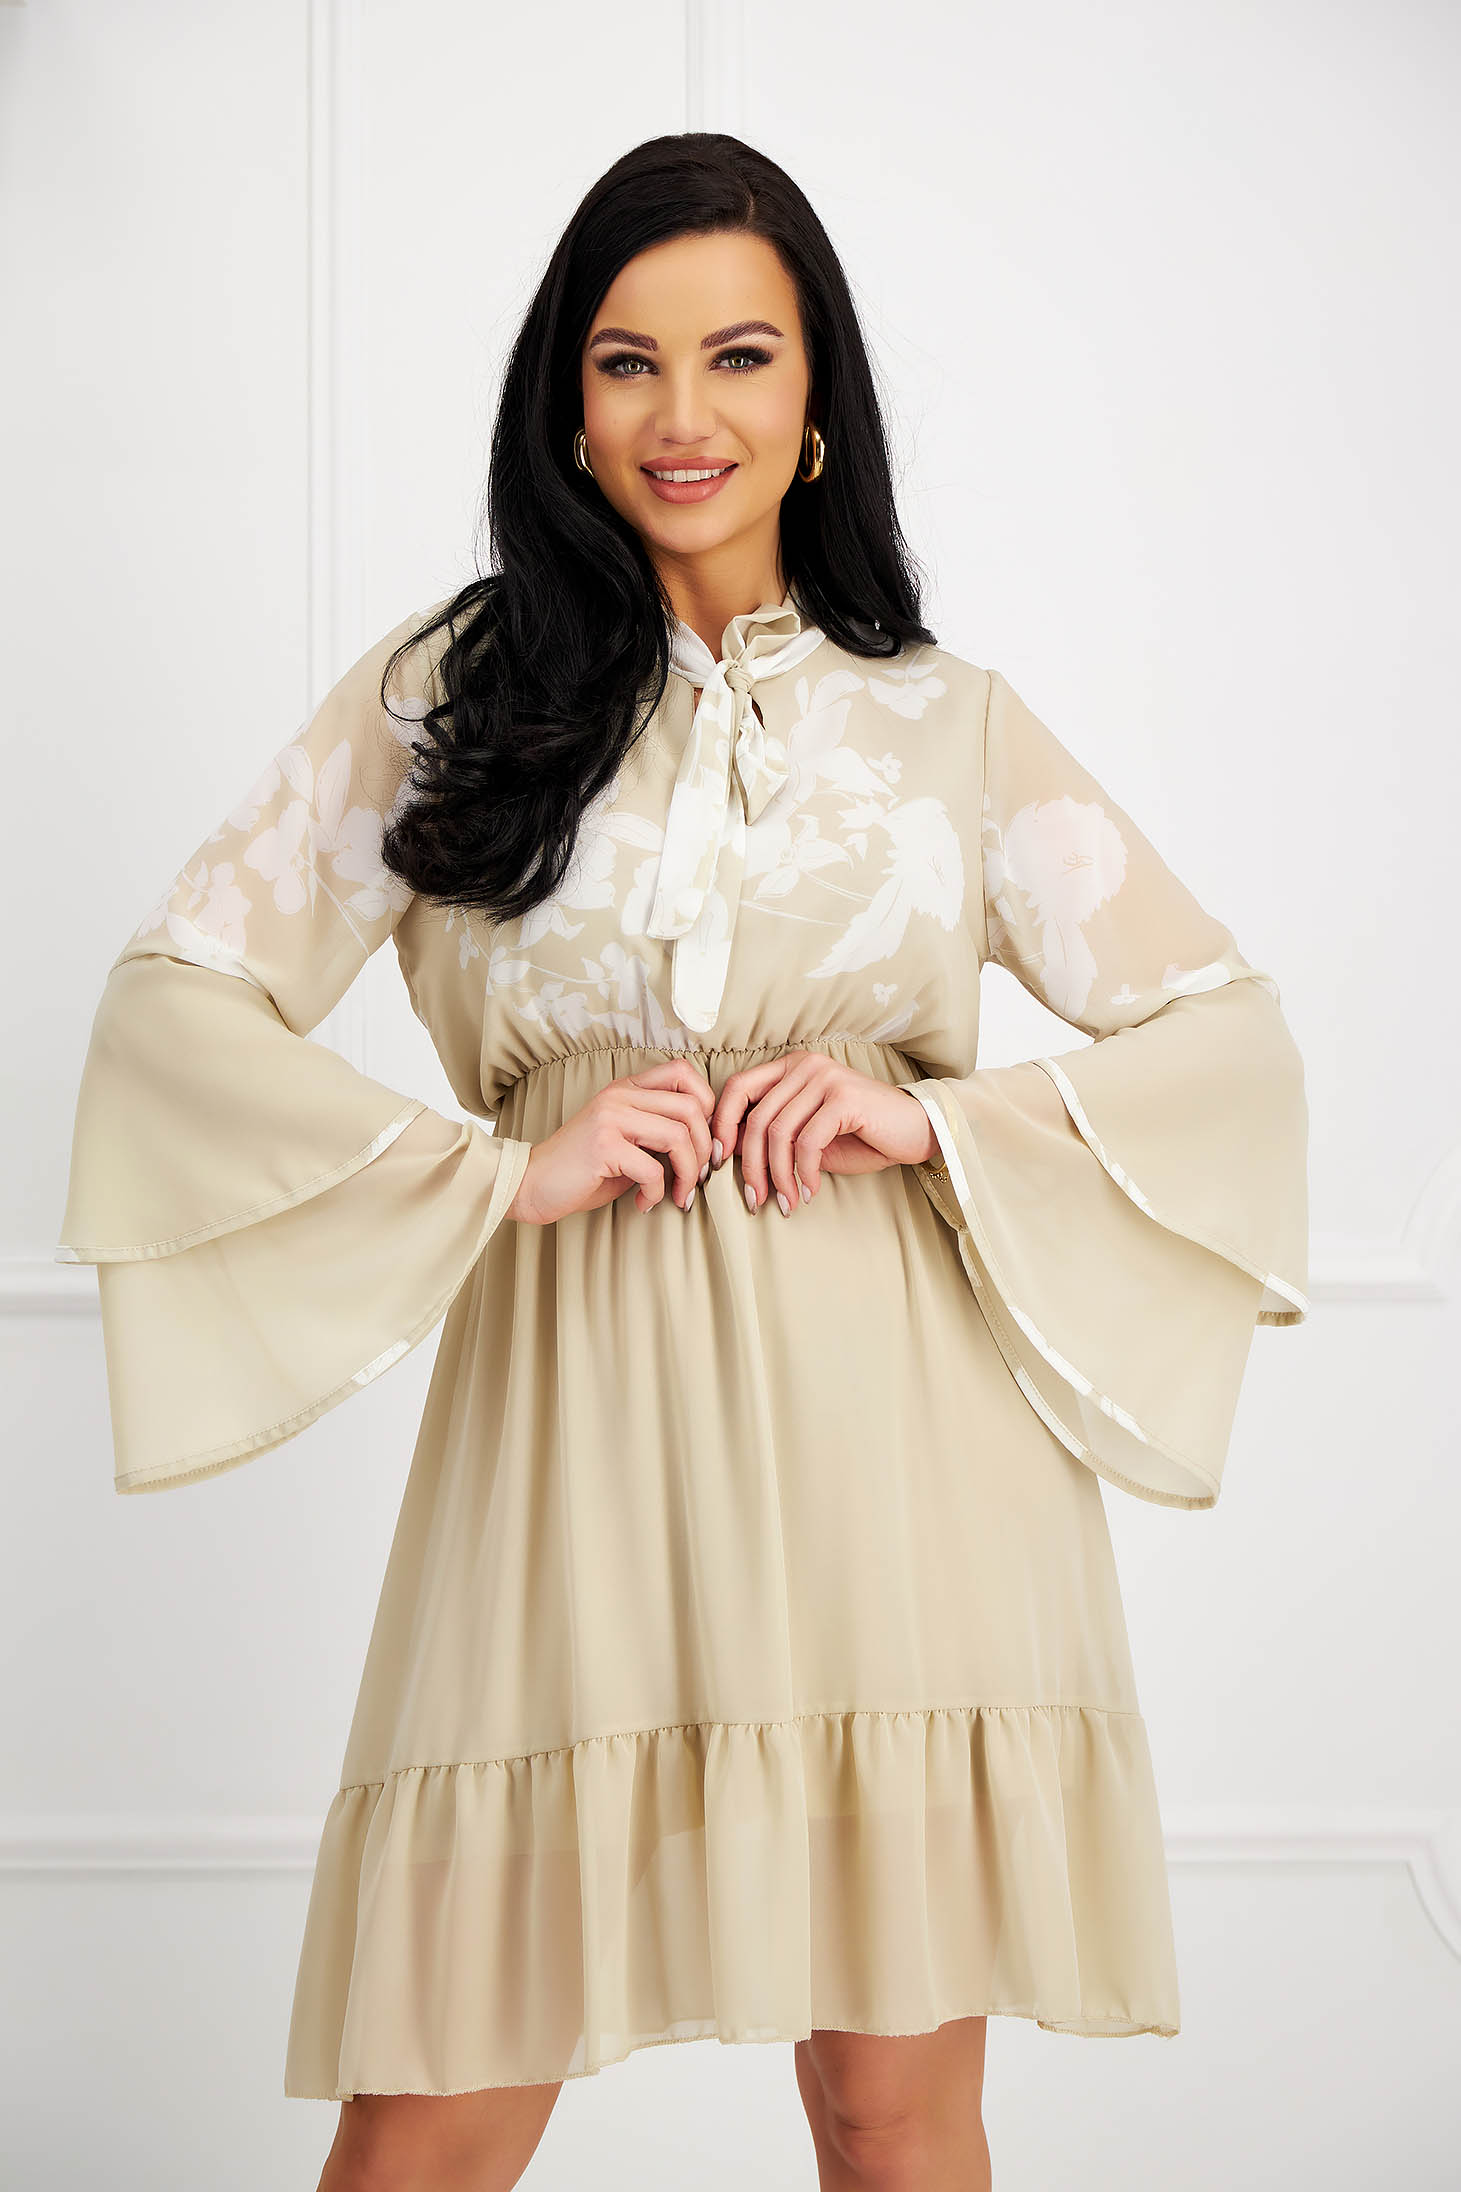 Chiffon Cream Dress in A-line with Elastic Waist and Ruffle Sleeves - SunShine 5 - StarShinerS.com